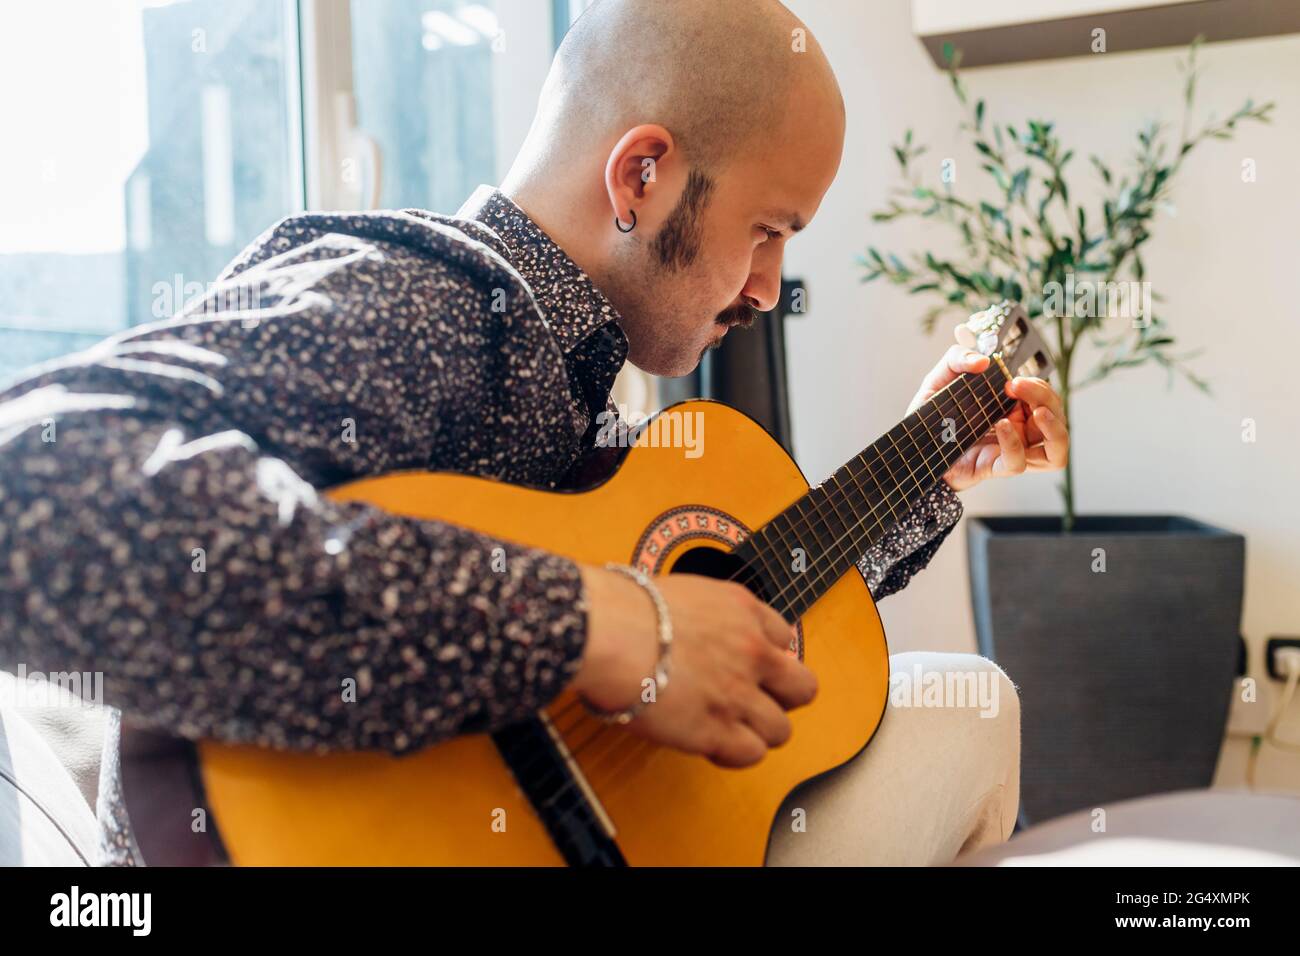 Man playing guitar at home Stock Photo